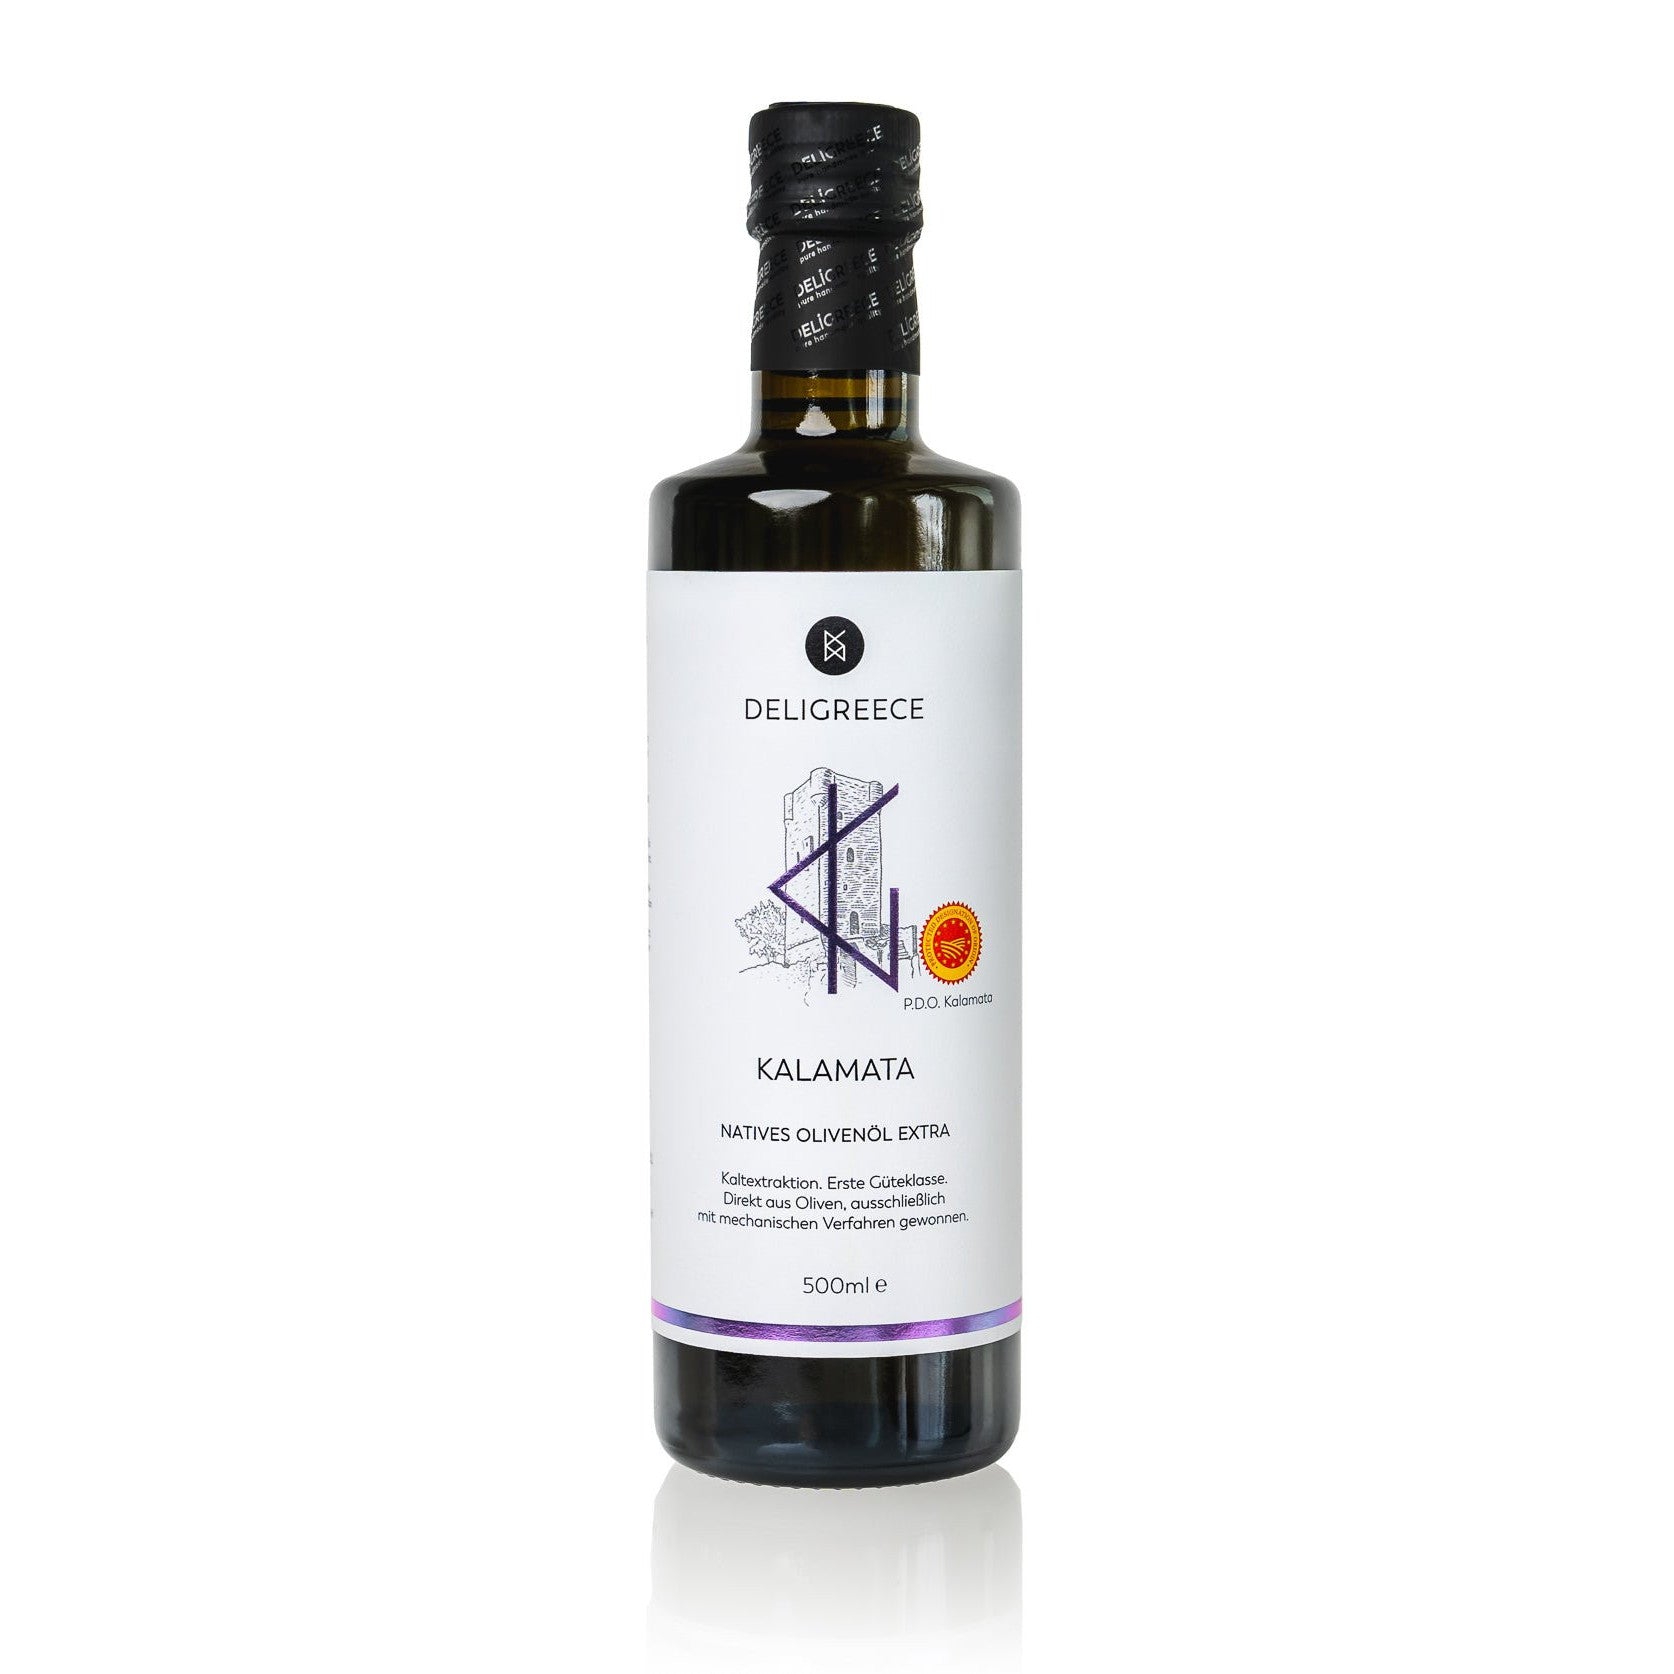 Deligreece Kalamata natives Olivenöl extra (0,5l) - Gourmet Markt - Deligreece